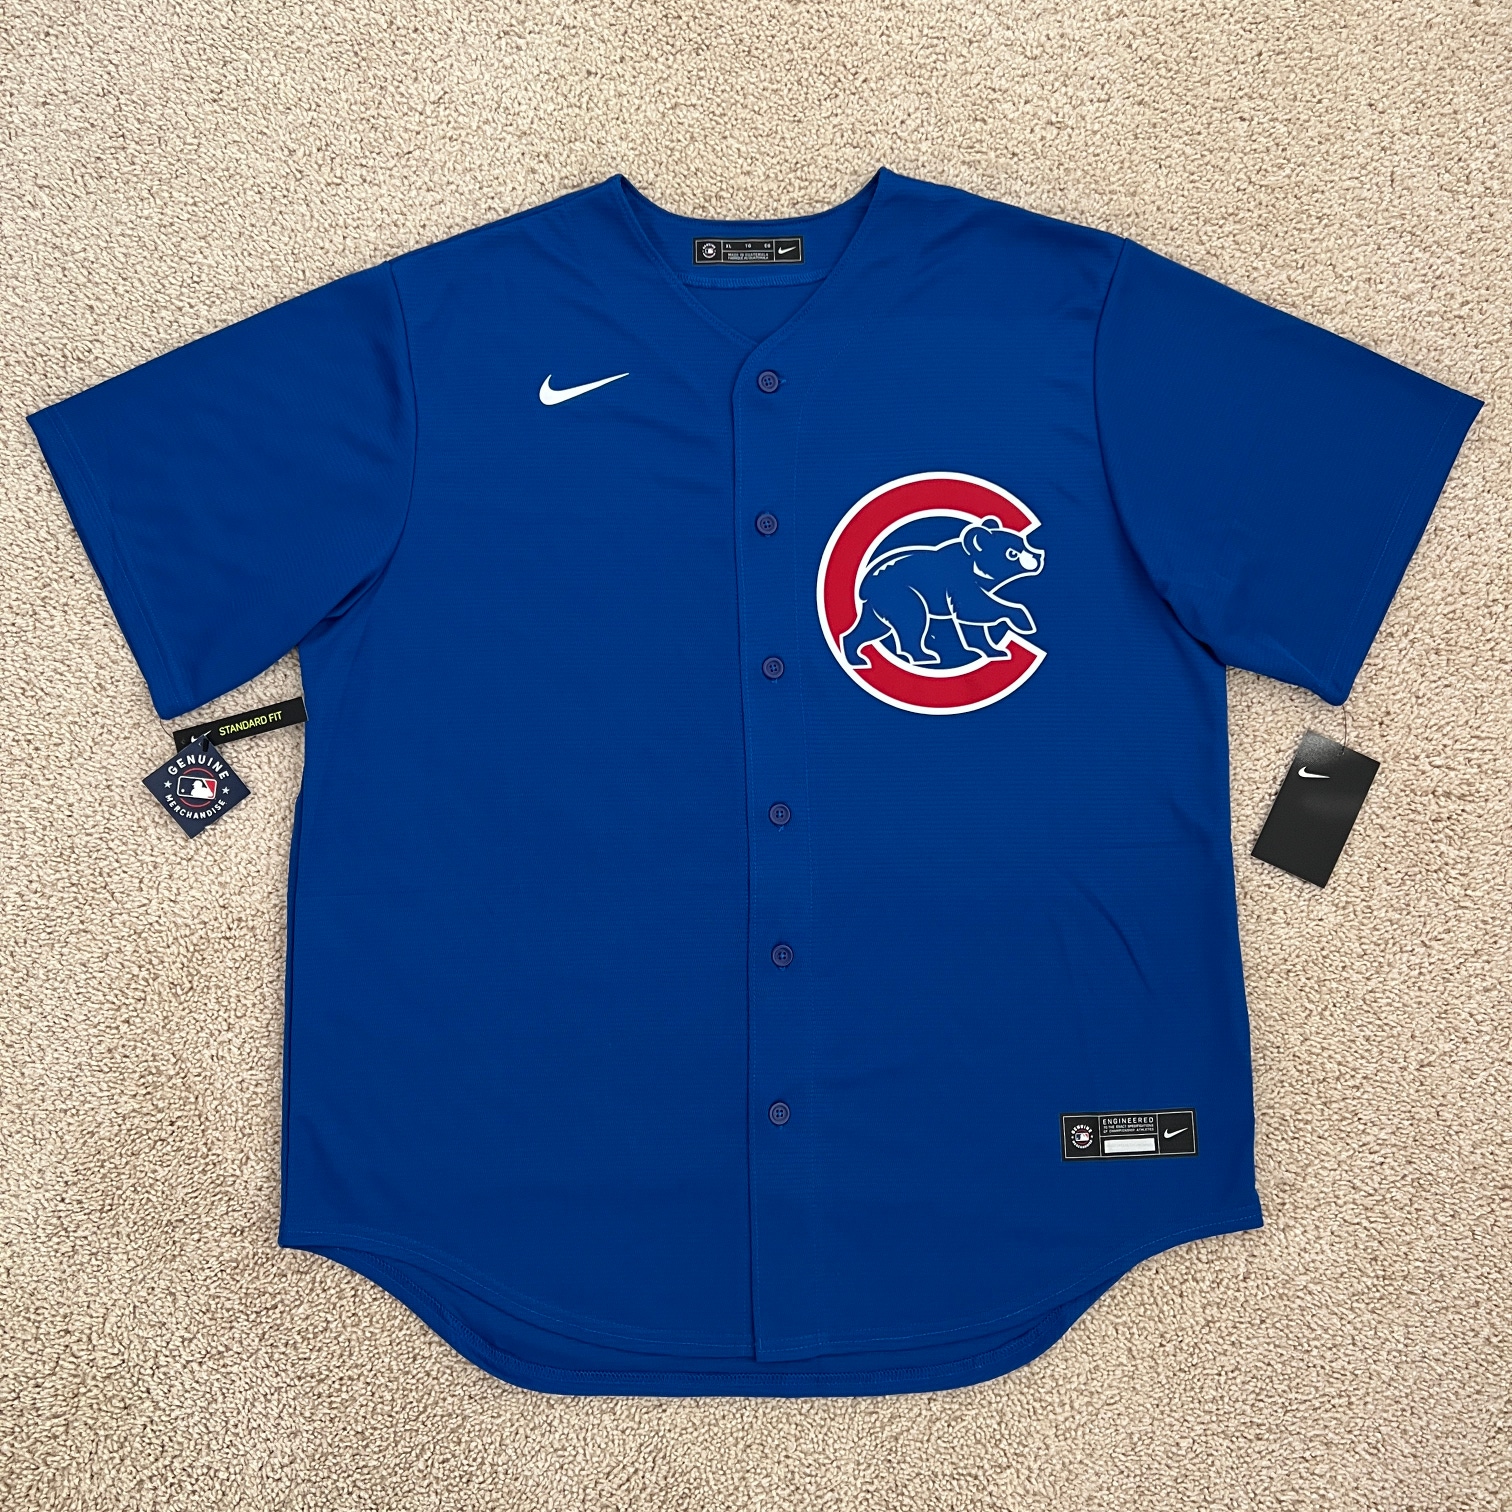 Nike Chicago Cubs Genuine MLB Baseball Royal Jersey Men’s Size XL